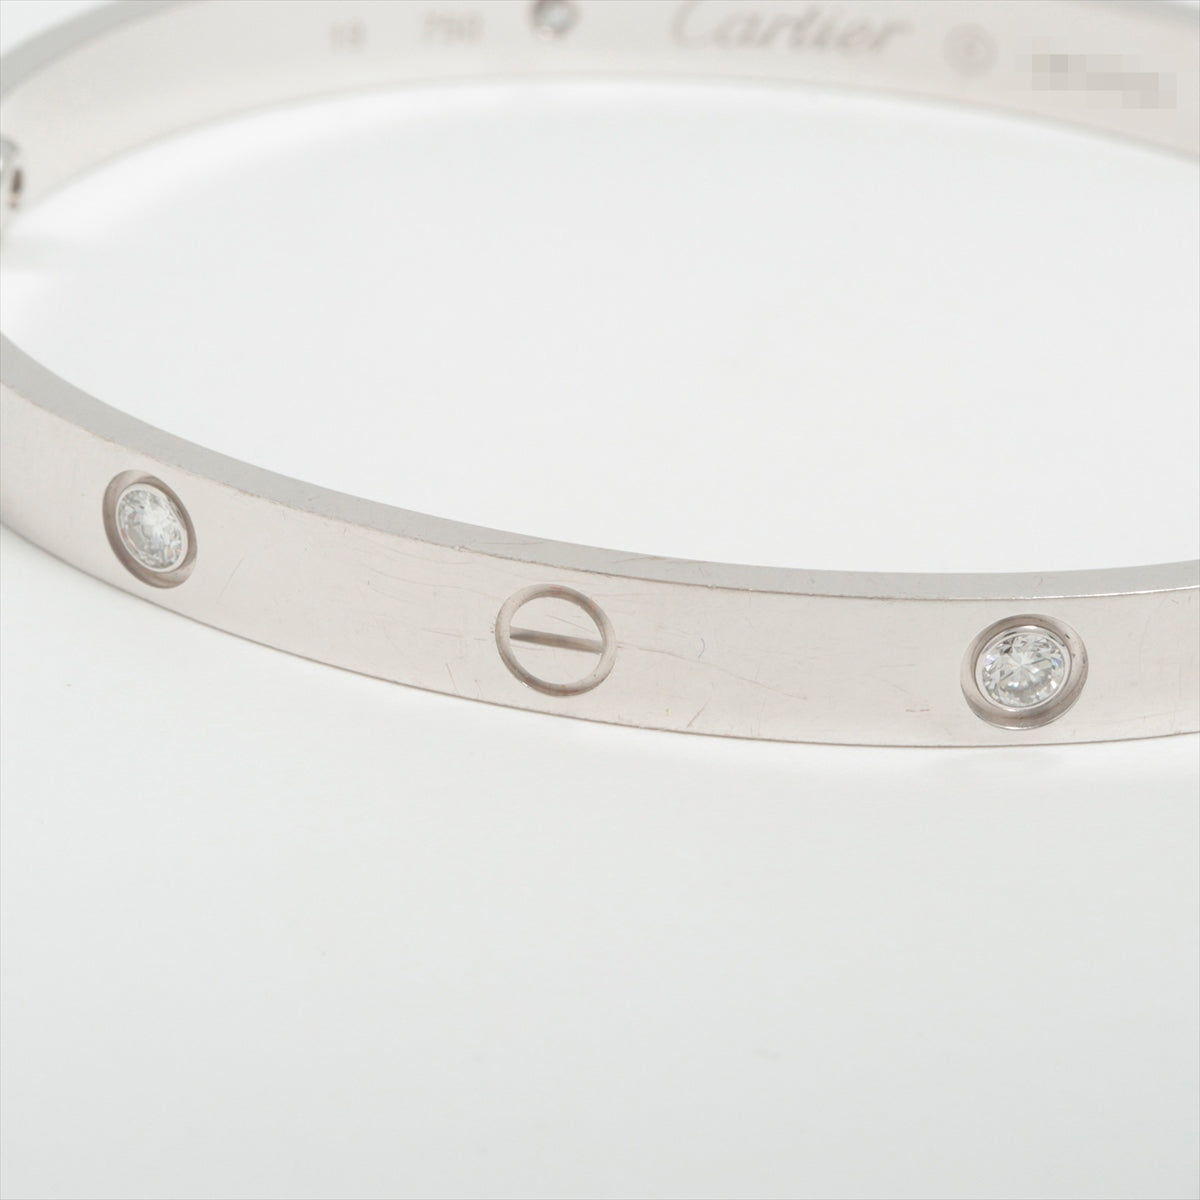 Cartier Love half diamond Bracelet 750(WG) 36.5g 19